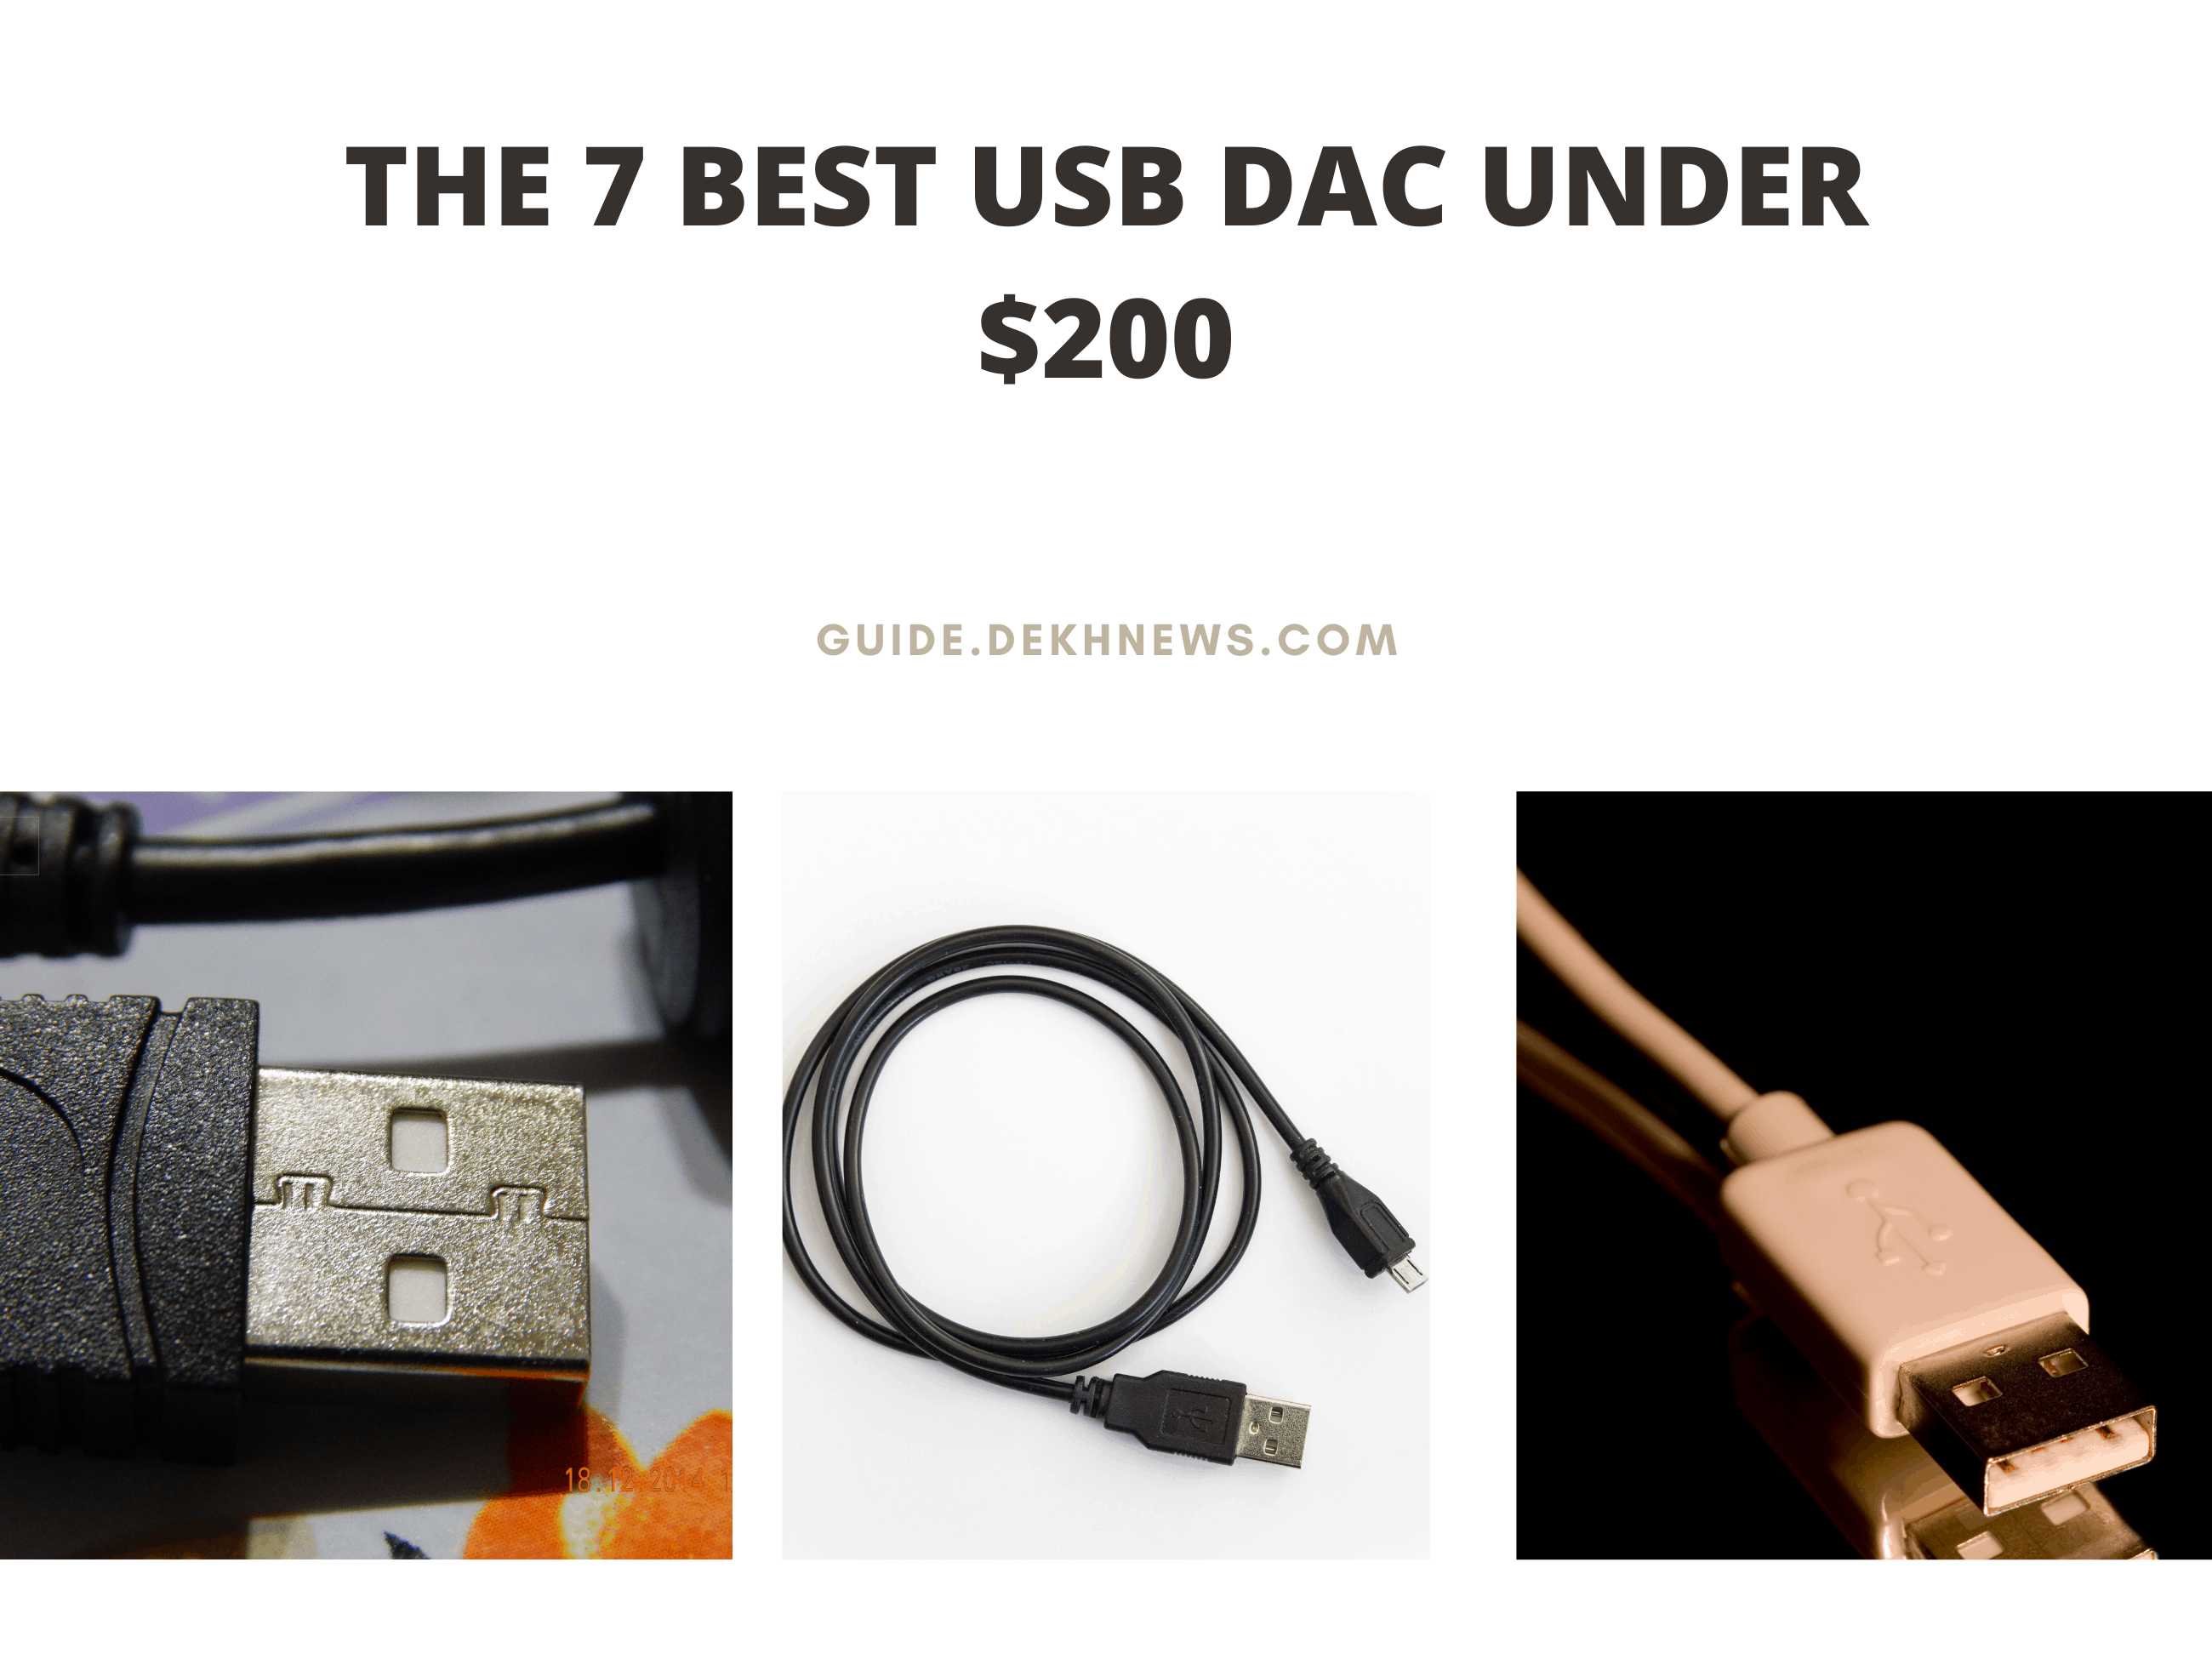 The 7 Best USB DAC Under $200